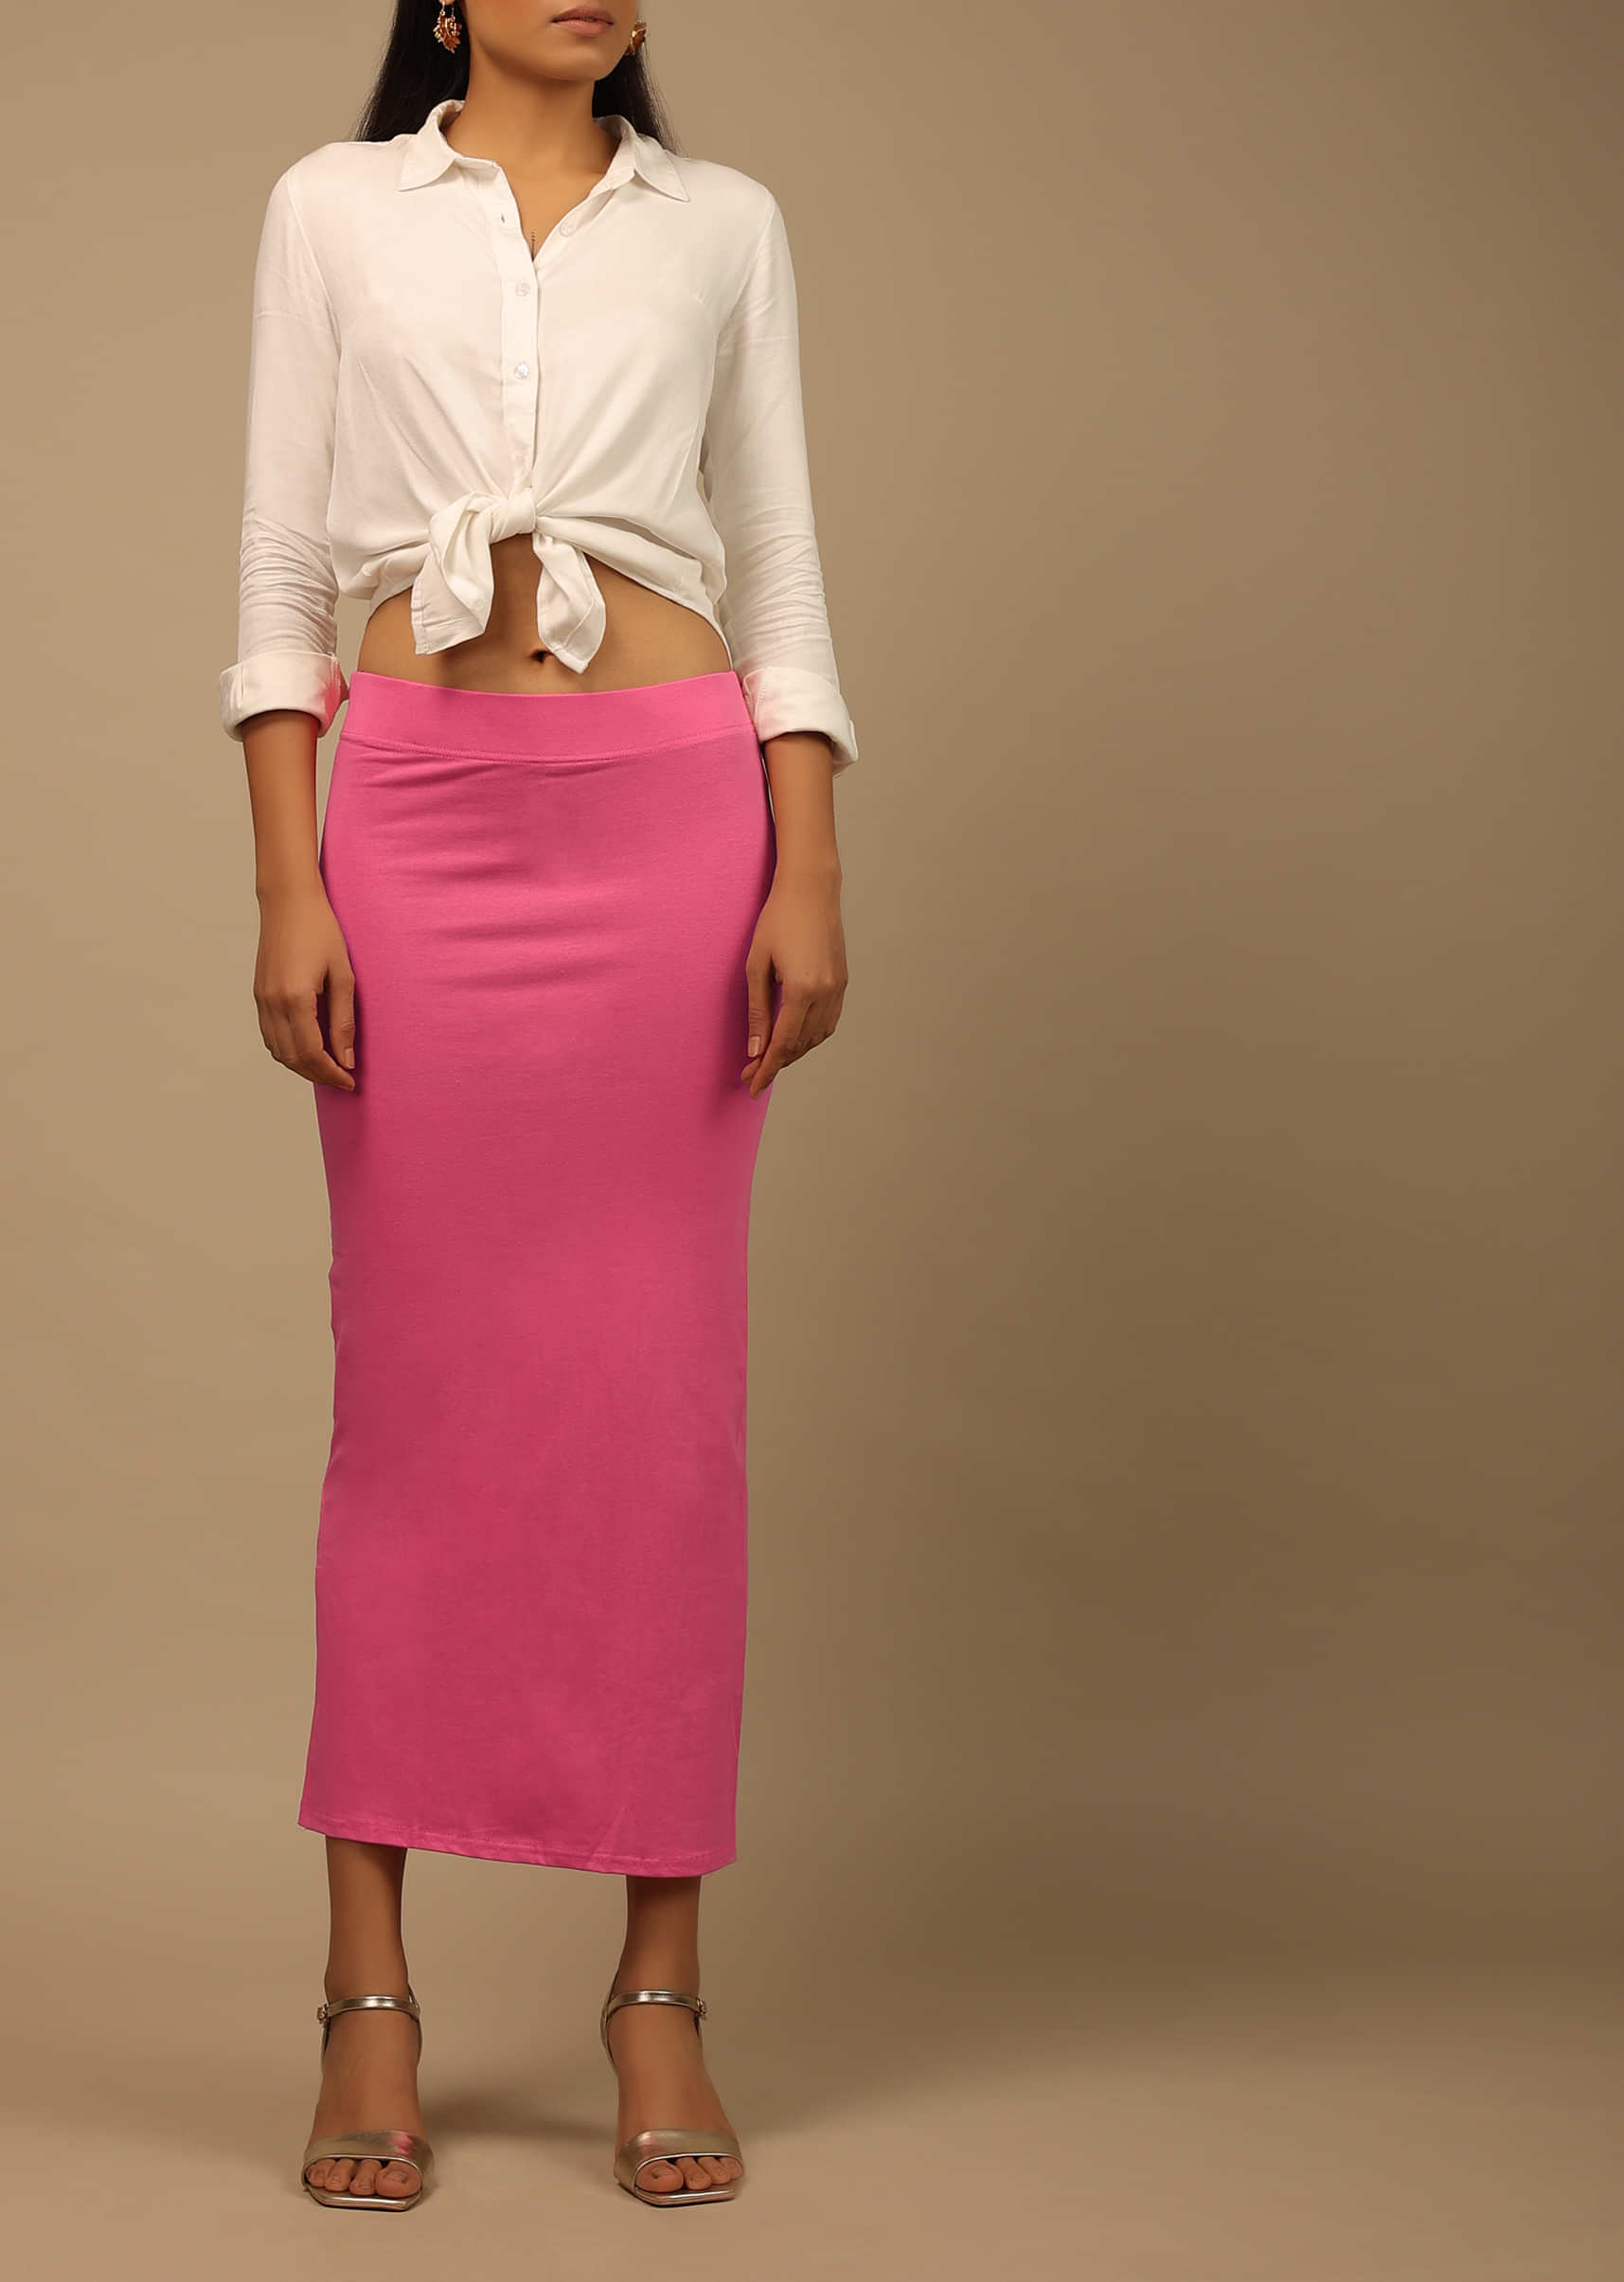 Saree Shapewear Petticoat for Women,, Free shipping from india .